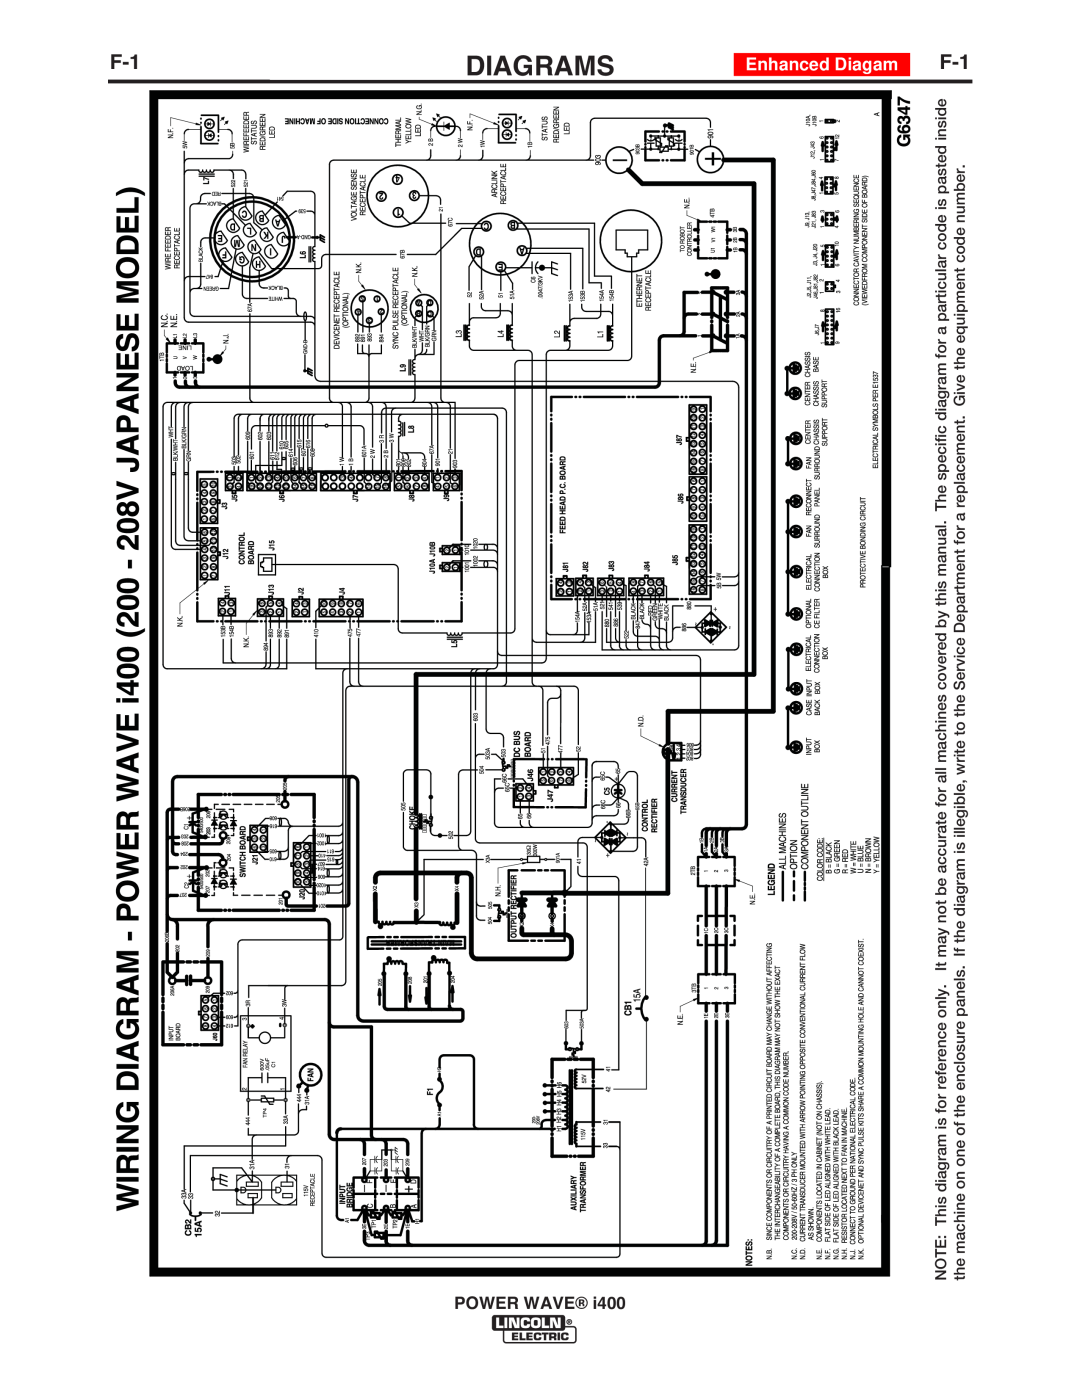 Lincoln Electric IM986 manual Diagrams, Enhanced Diagam 